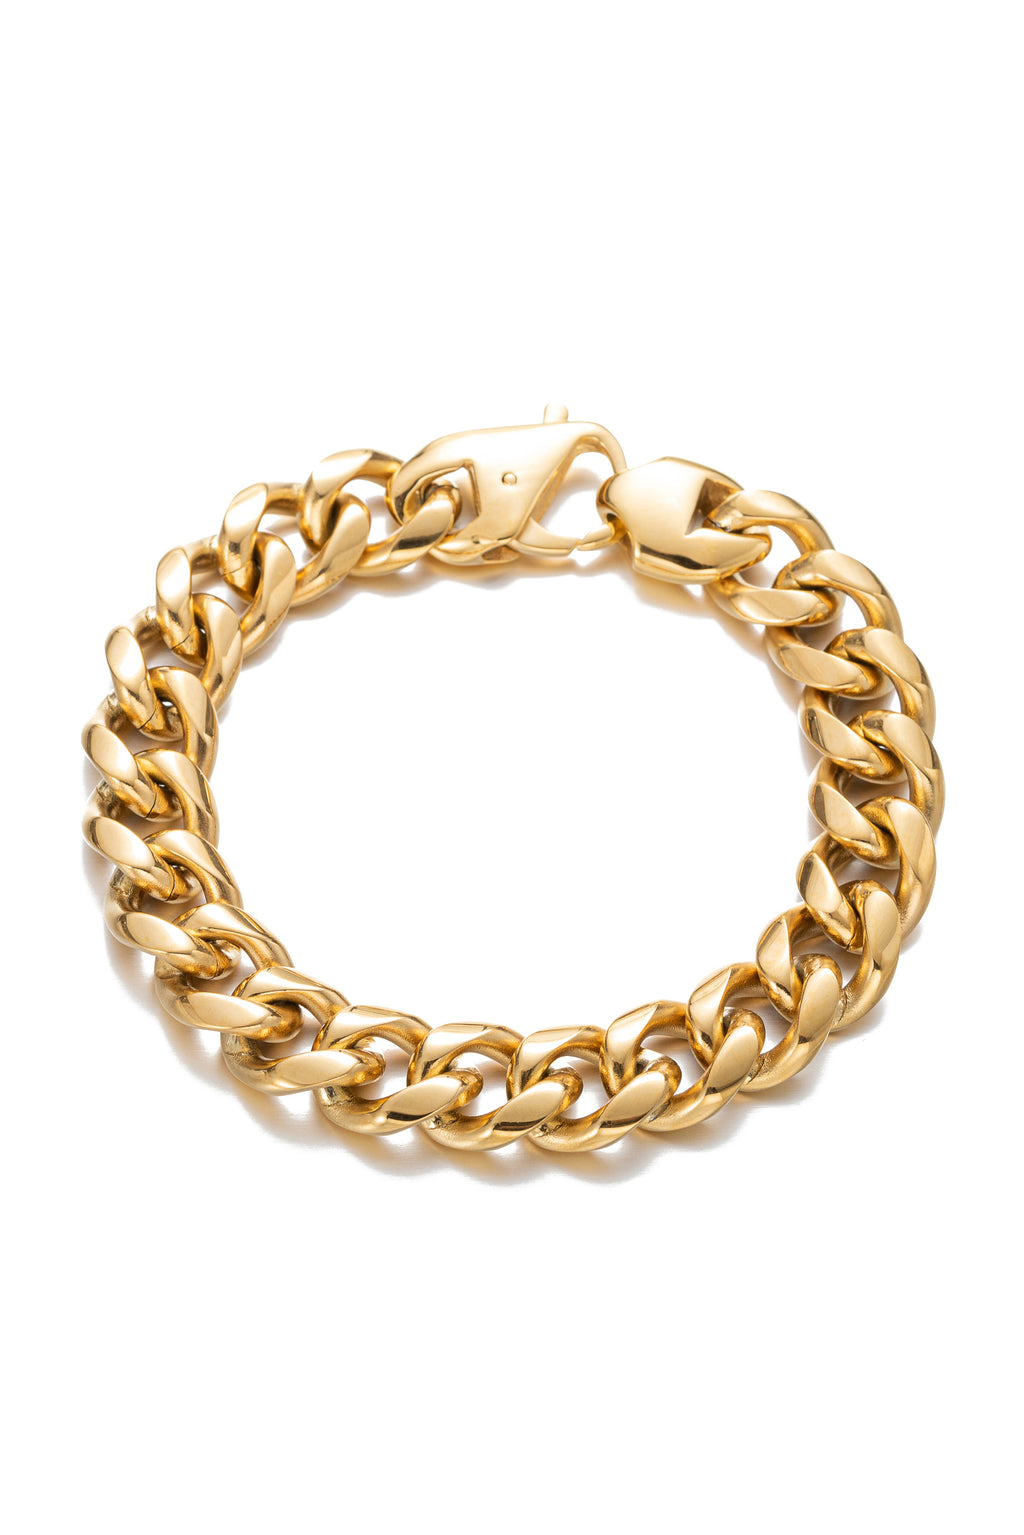 Titanium 18K gold plated braided chain link bracelet.